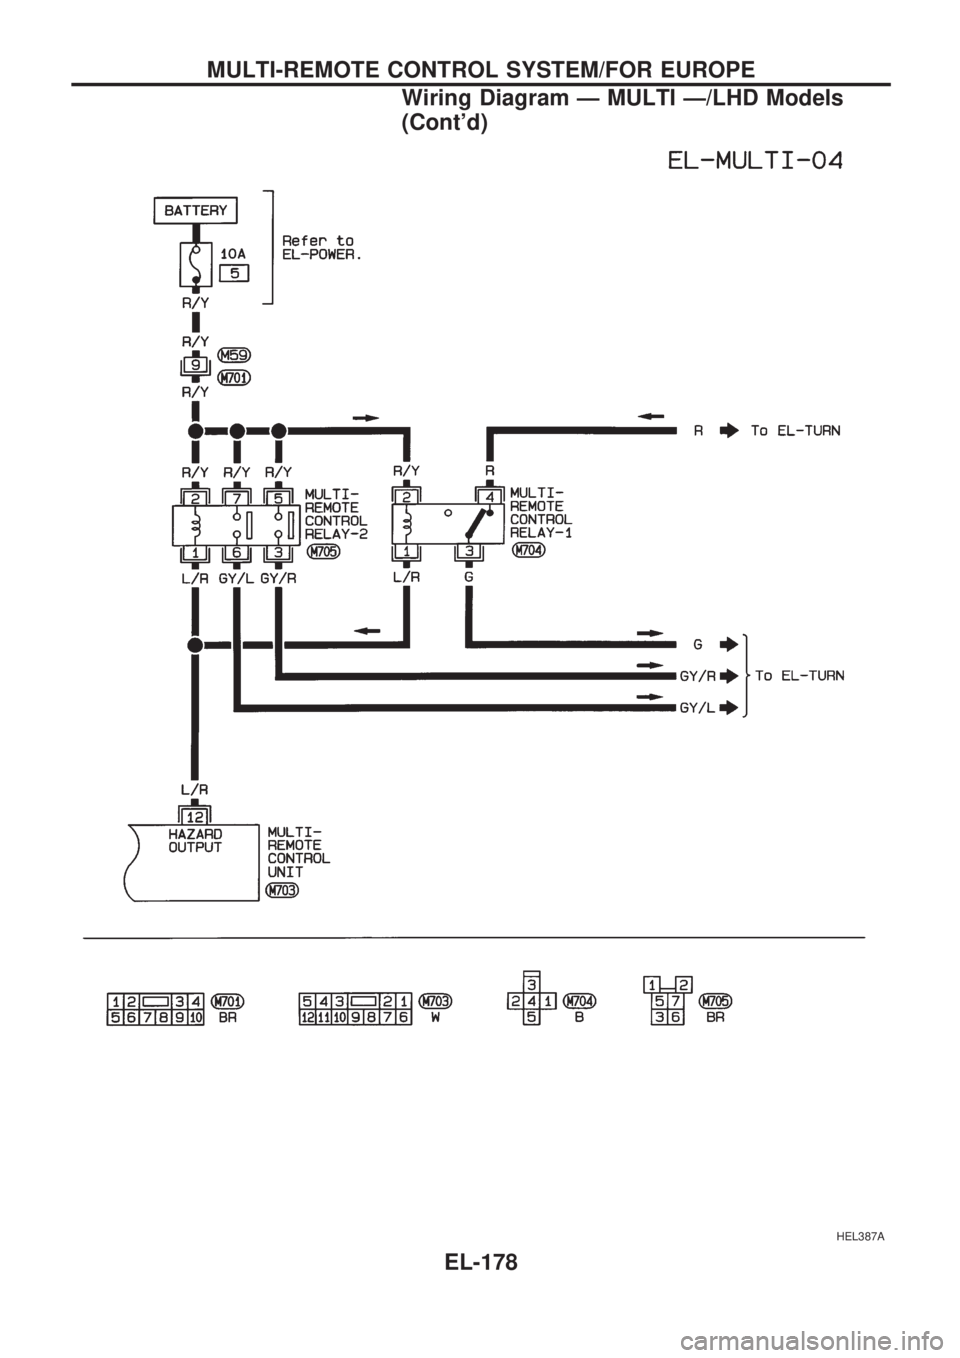 NISSAN PICK-UP 1998  Repair Manual HEL387A
MULTI-REMOTE CONTROL SYSTEM/FOR EUROPE
Wiring Diagram Ð MULTI Ð/LHD Models
(Contd)
EL-178 